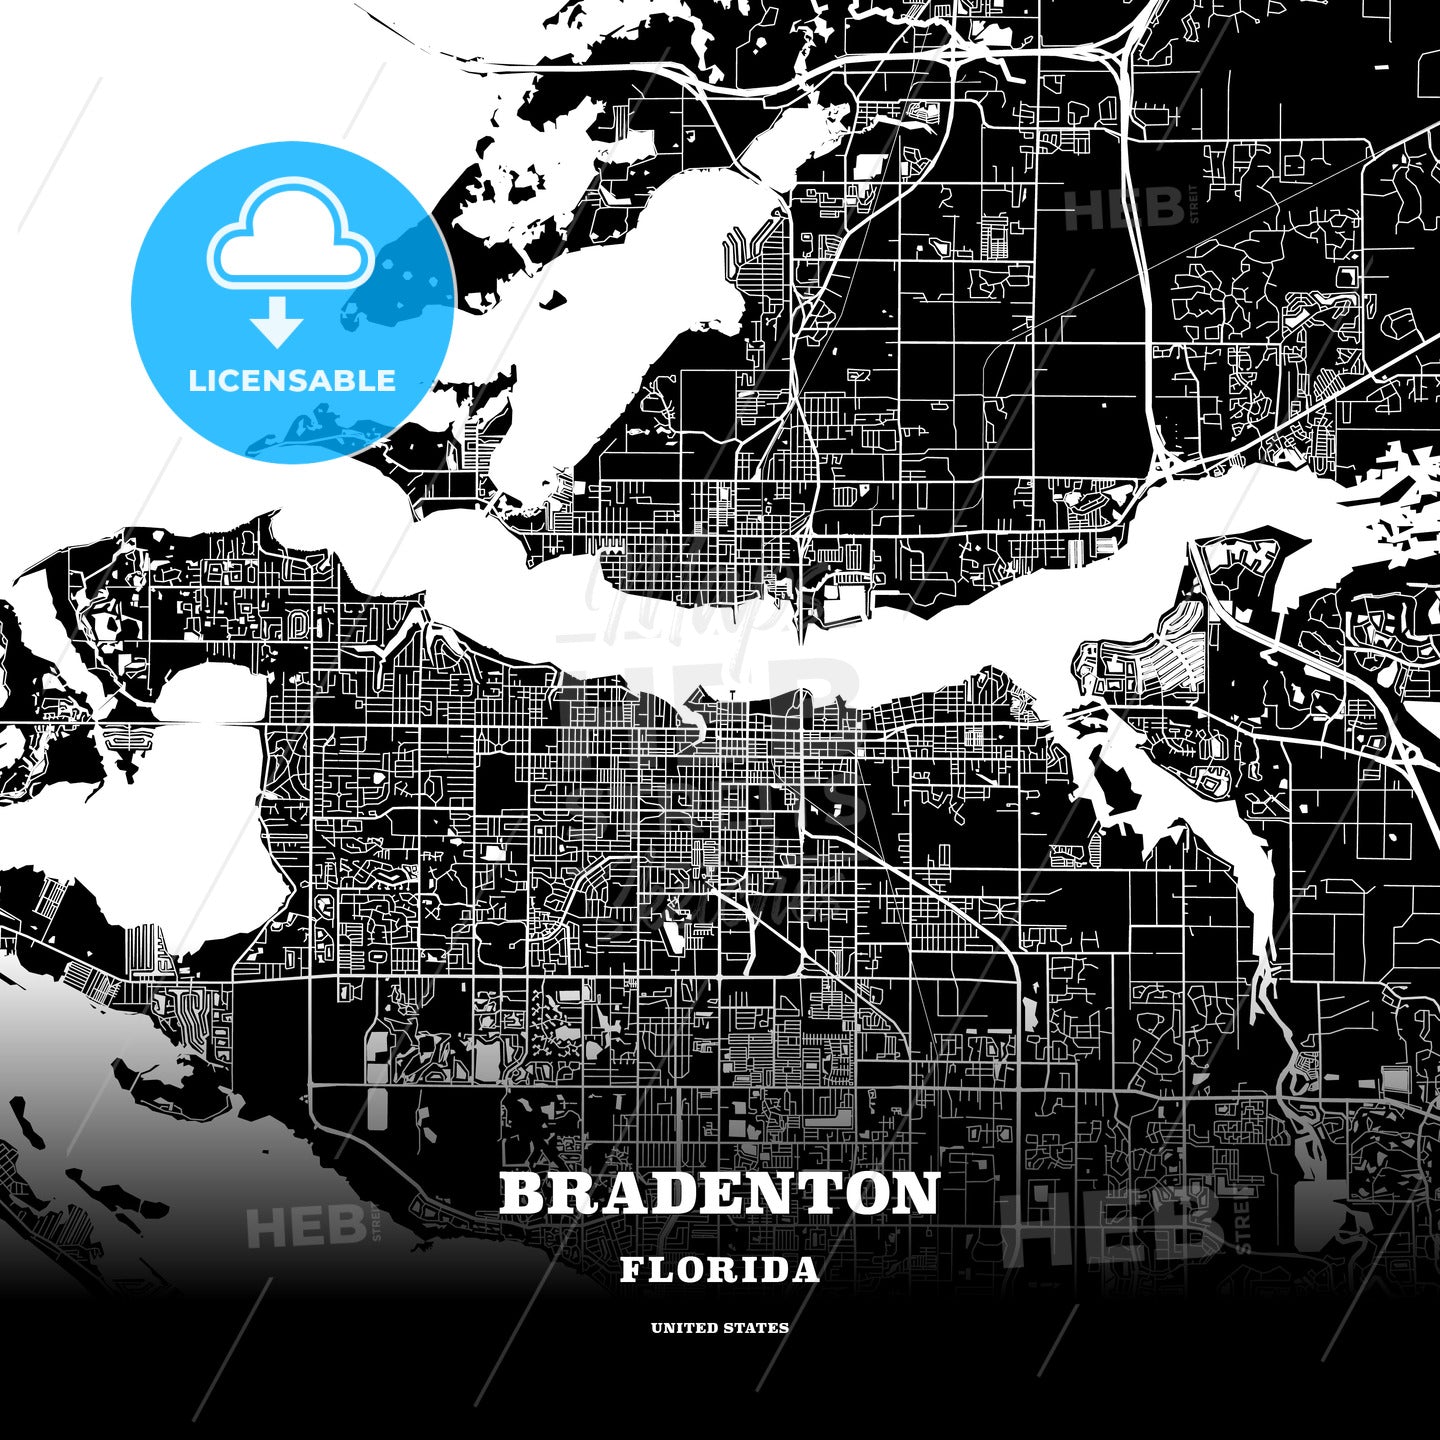 Bradenton, Florida, USA map